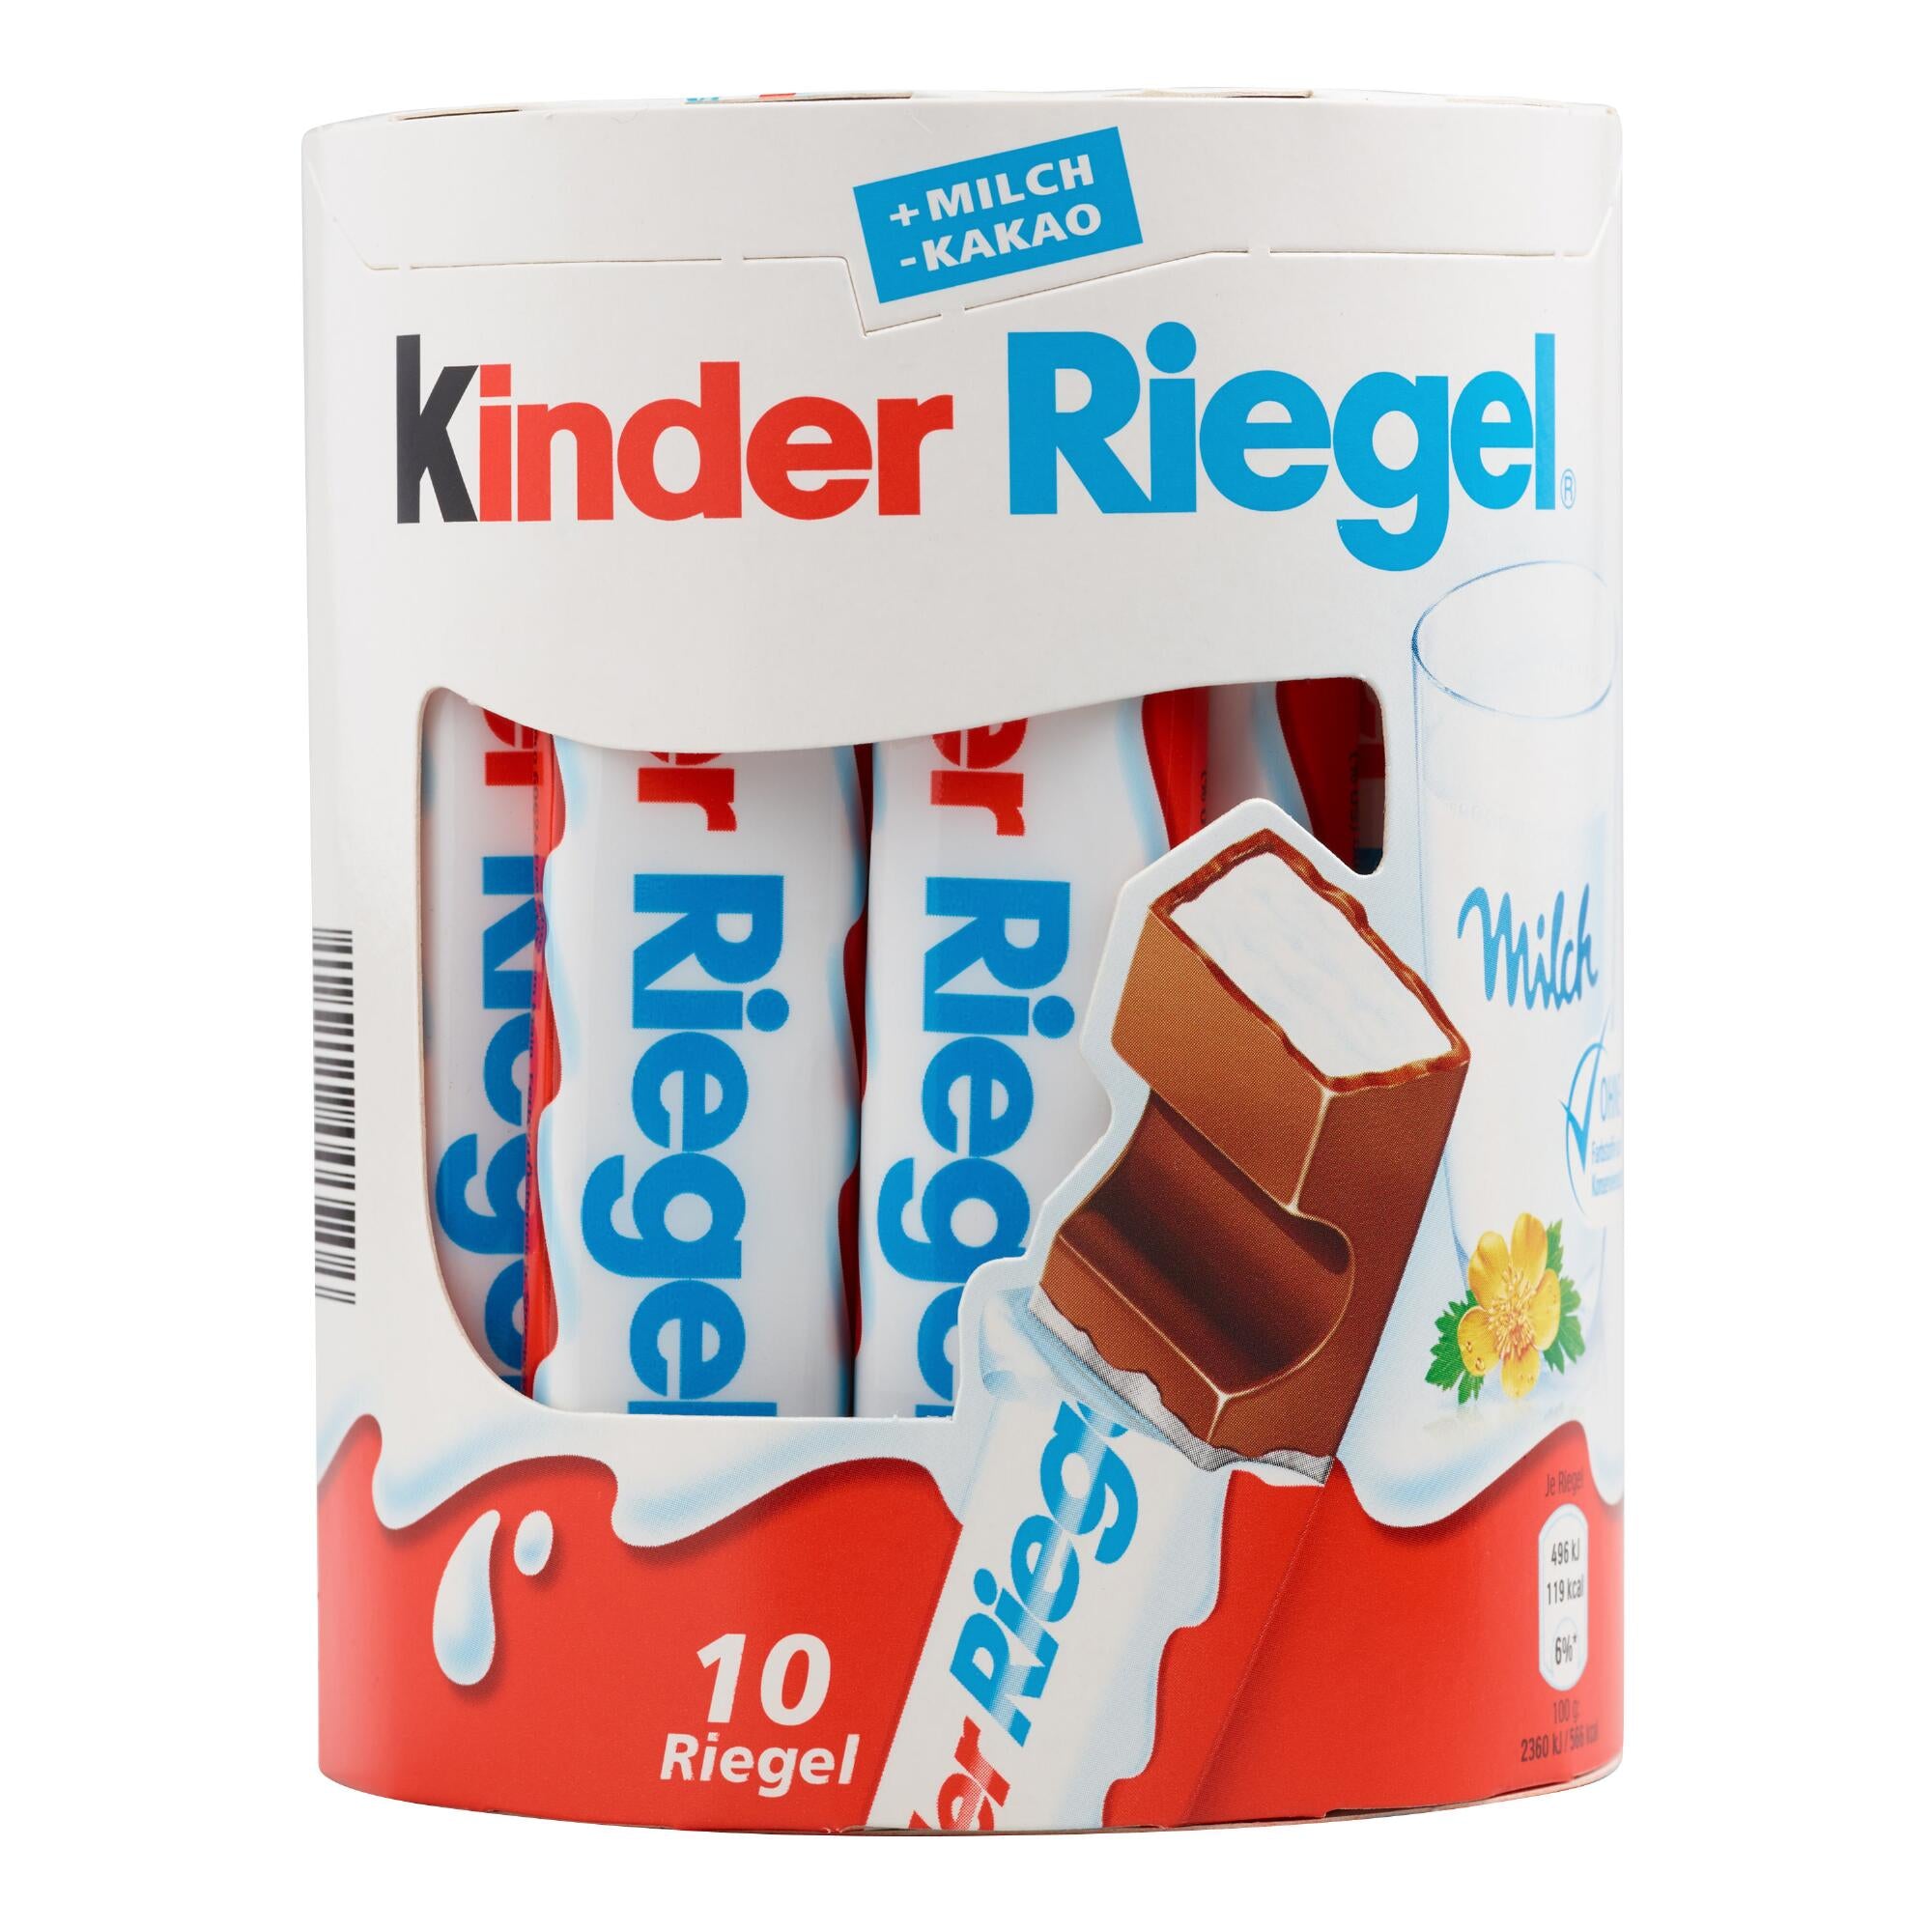 10 Milk Shop Kinder Candy Bars Riegel German LLC – Chocolate,